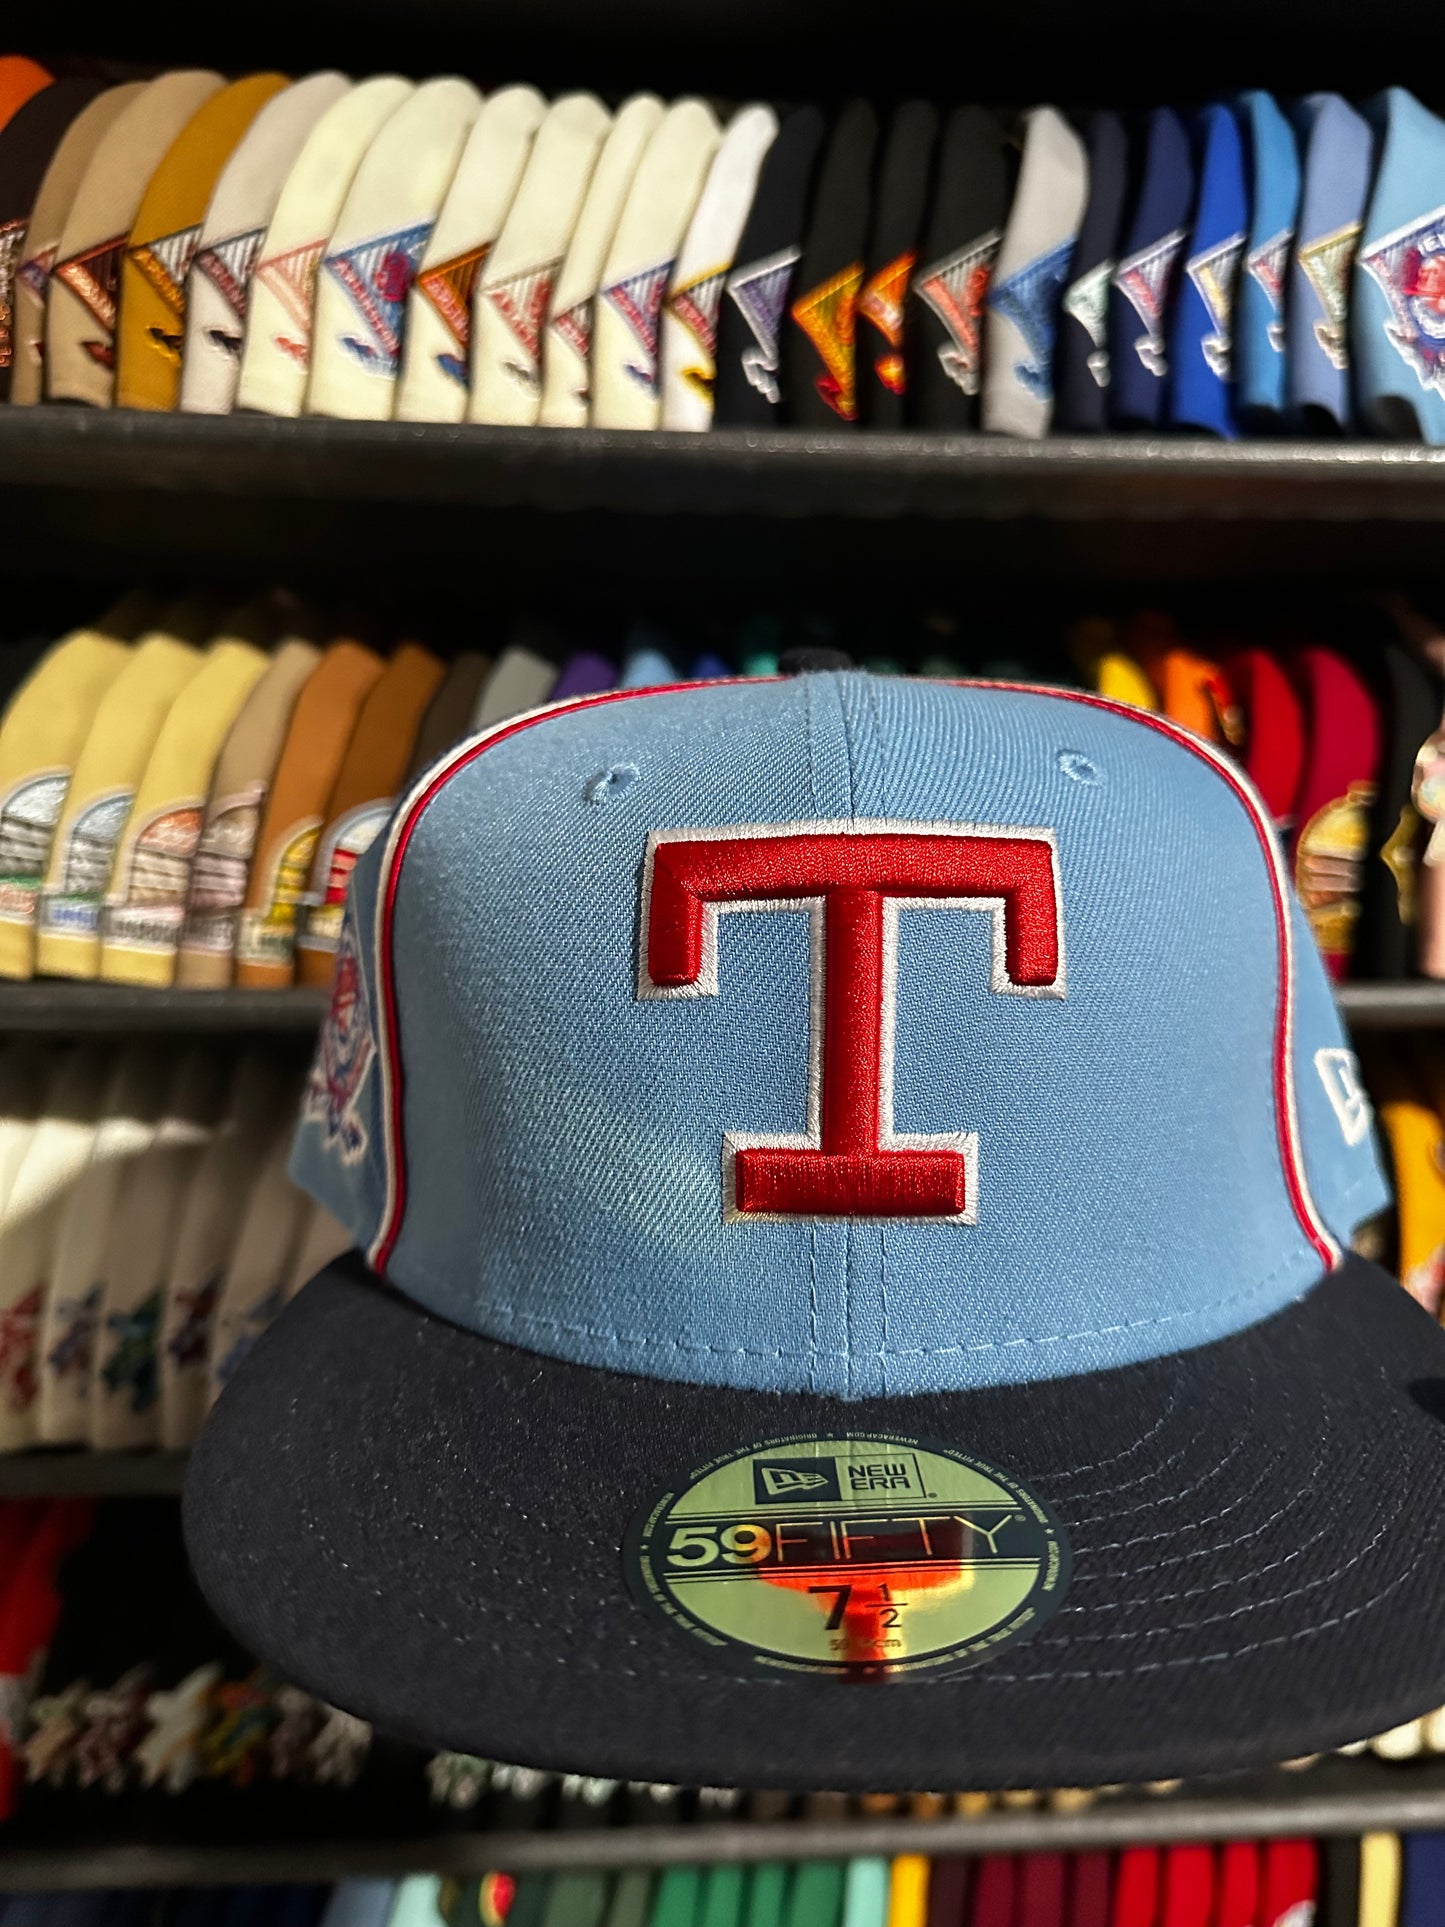 Hatclub Texas Rangers “No batterman”